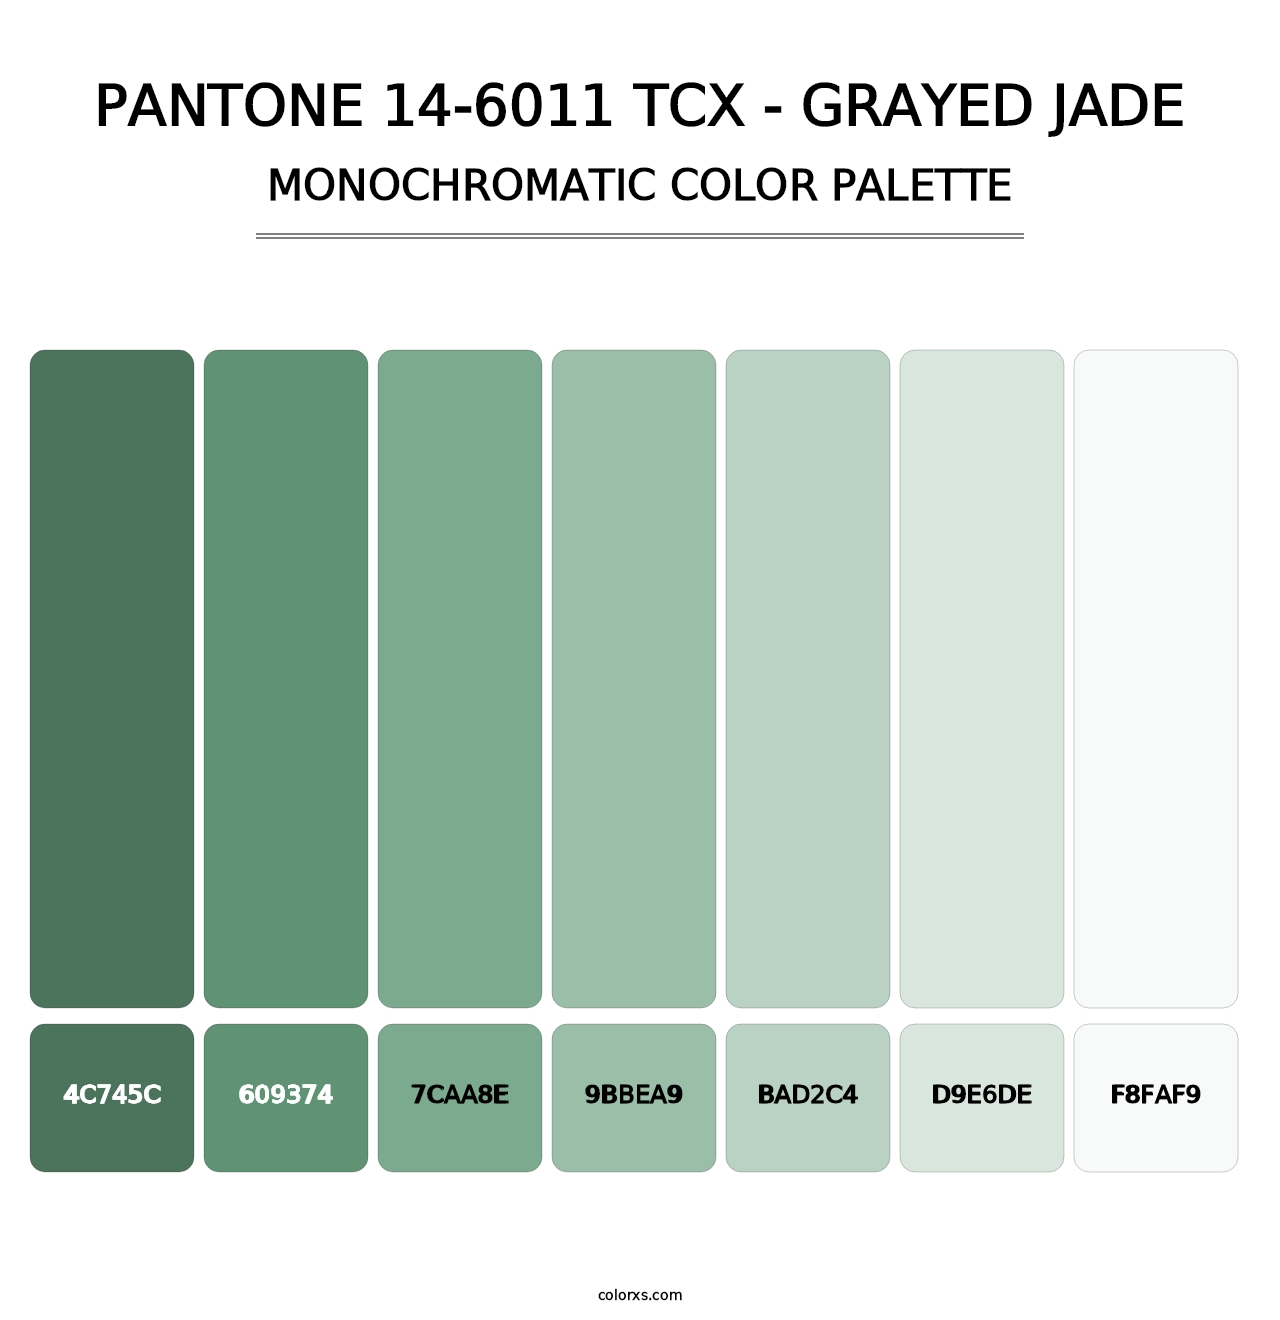 PANTONE 14-6011 TCX - Grayed Jade - Monochromatic Color Palette